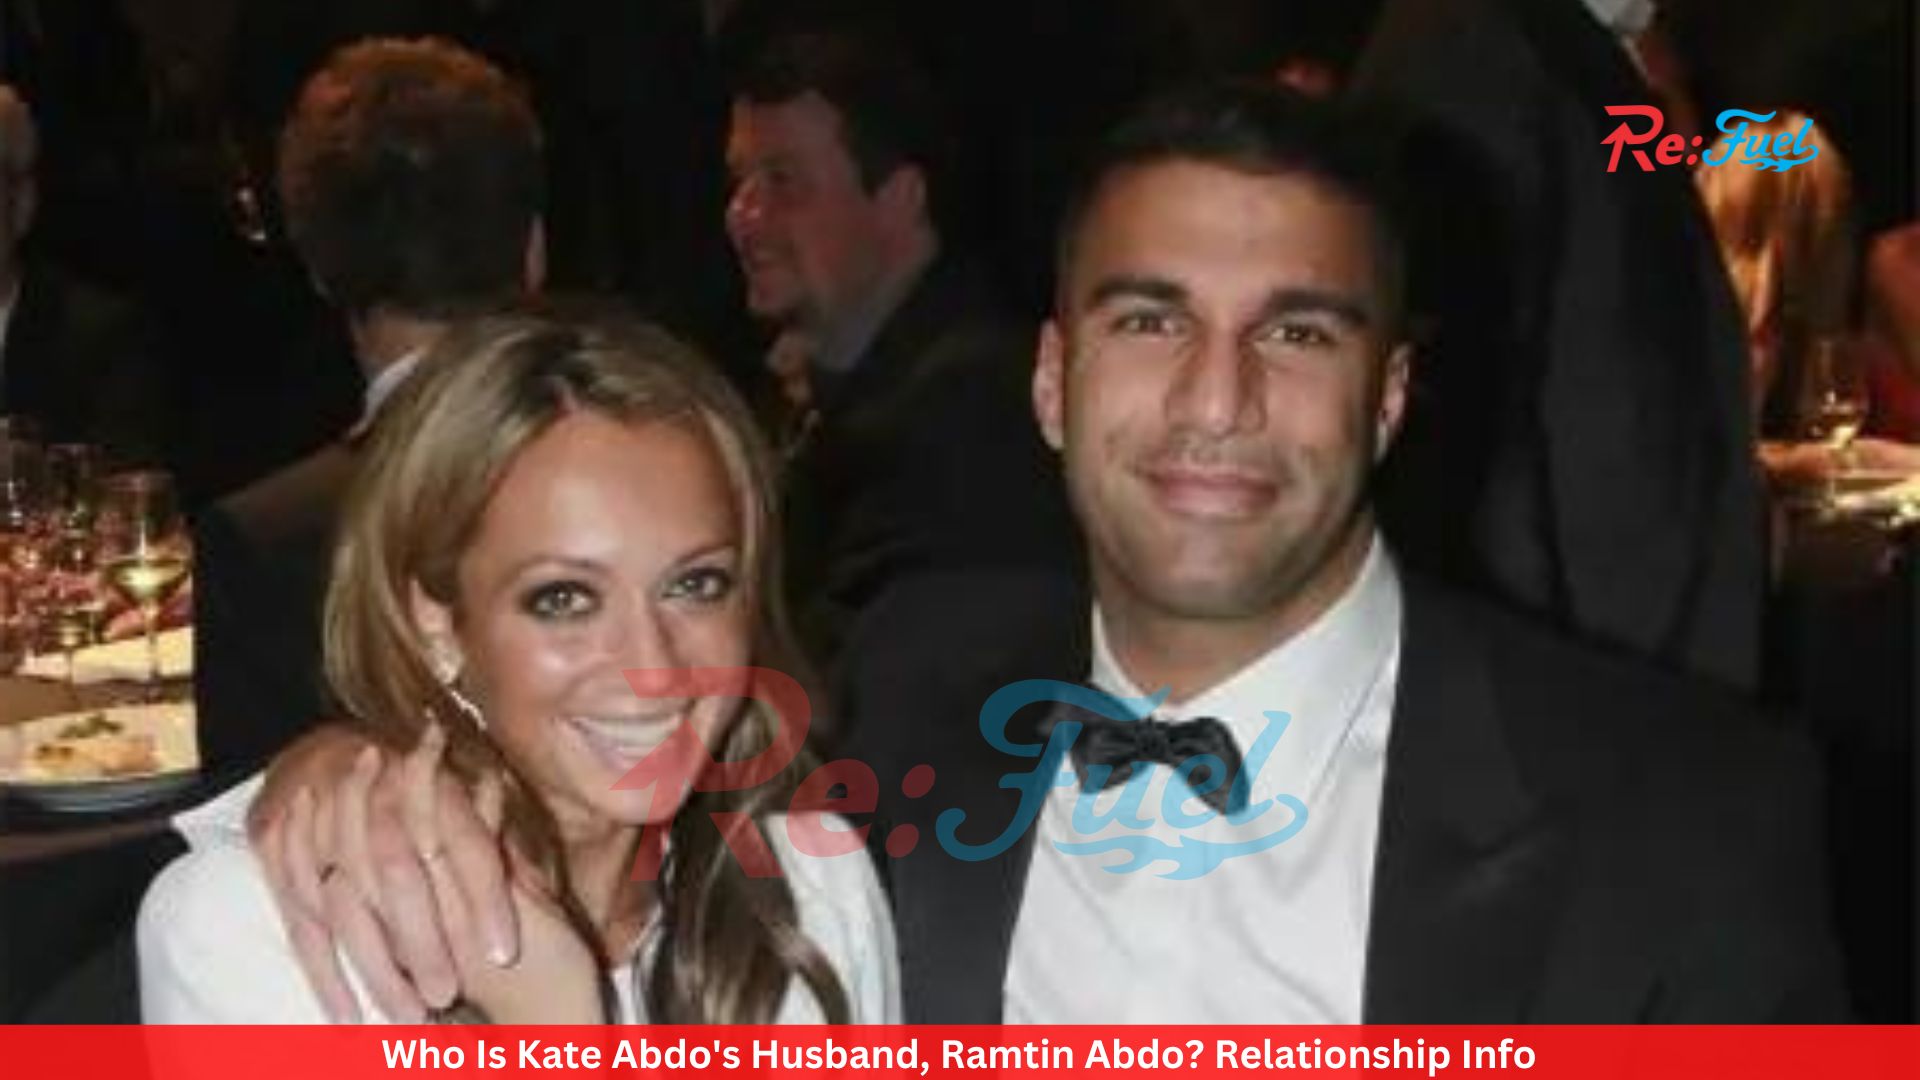 Who Is Kate Abdo's Husband, Ramtin Abdo? Relationship Info